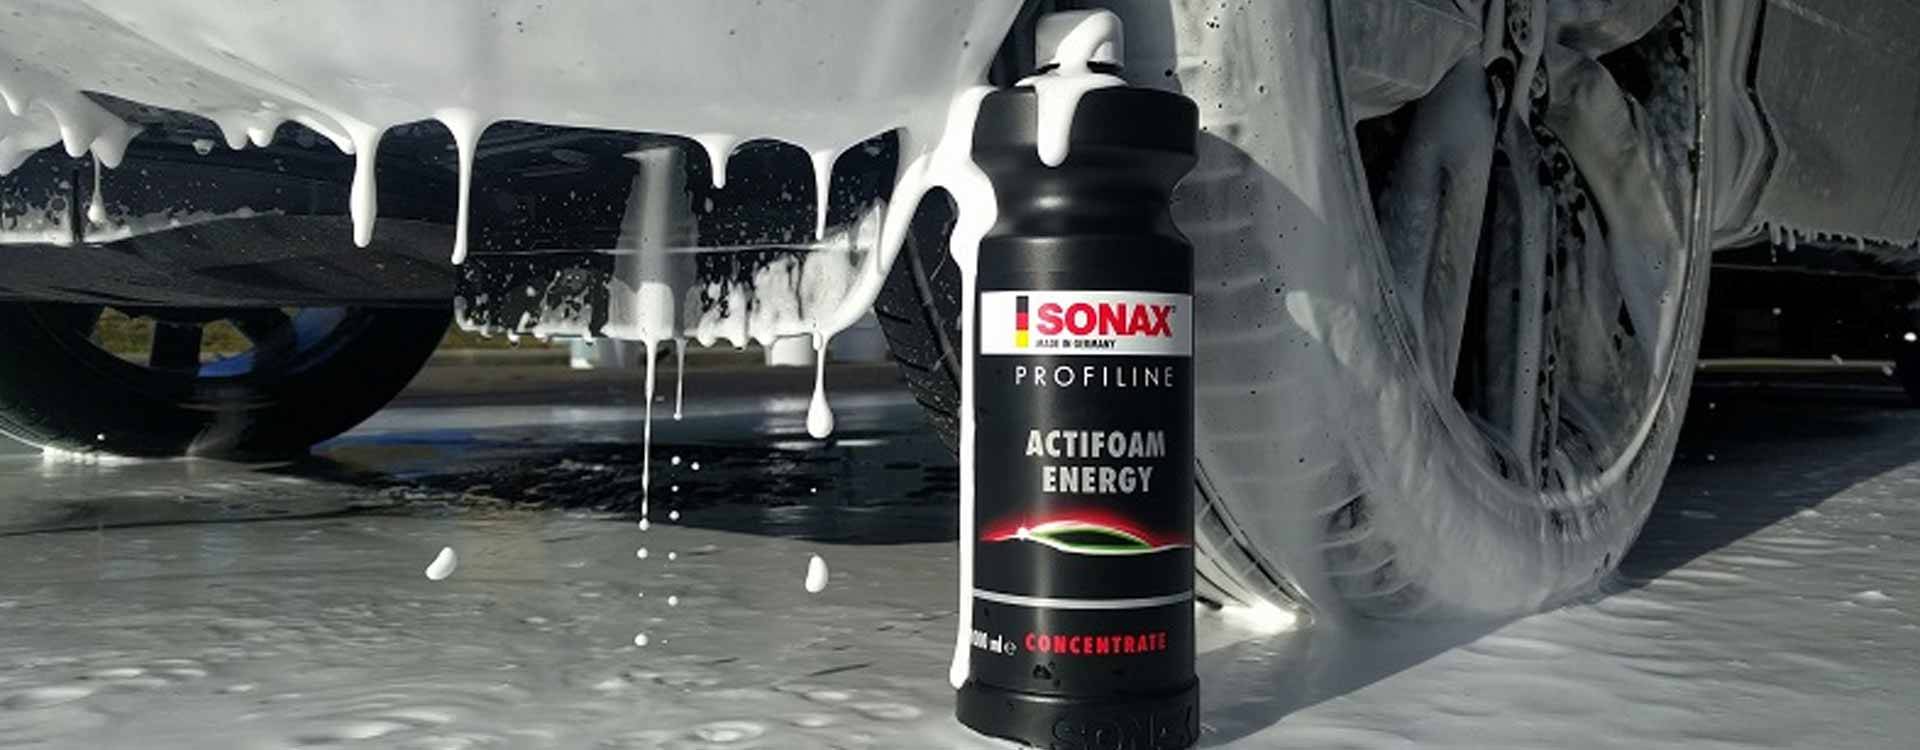 Sonax Actifoam Energie